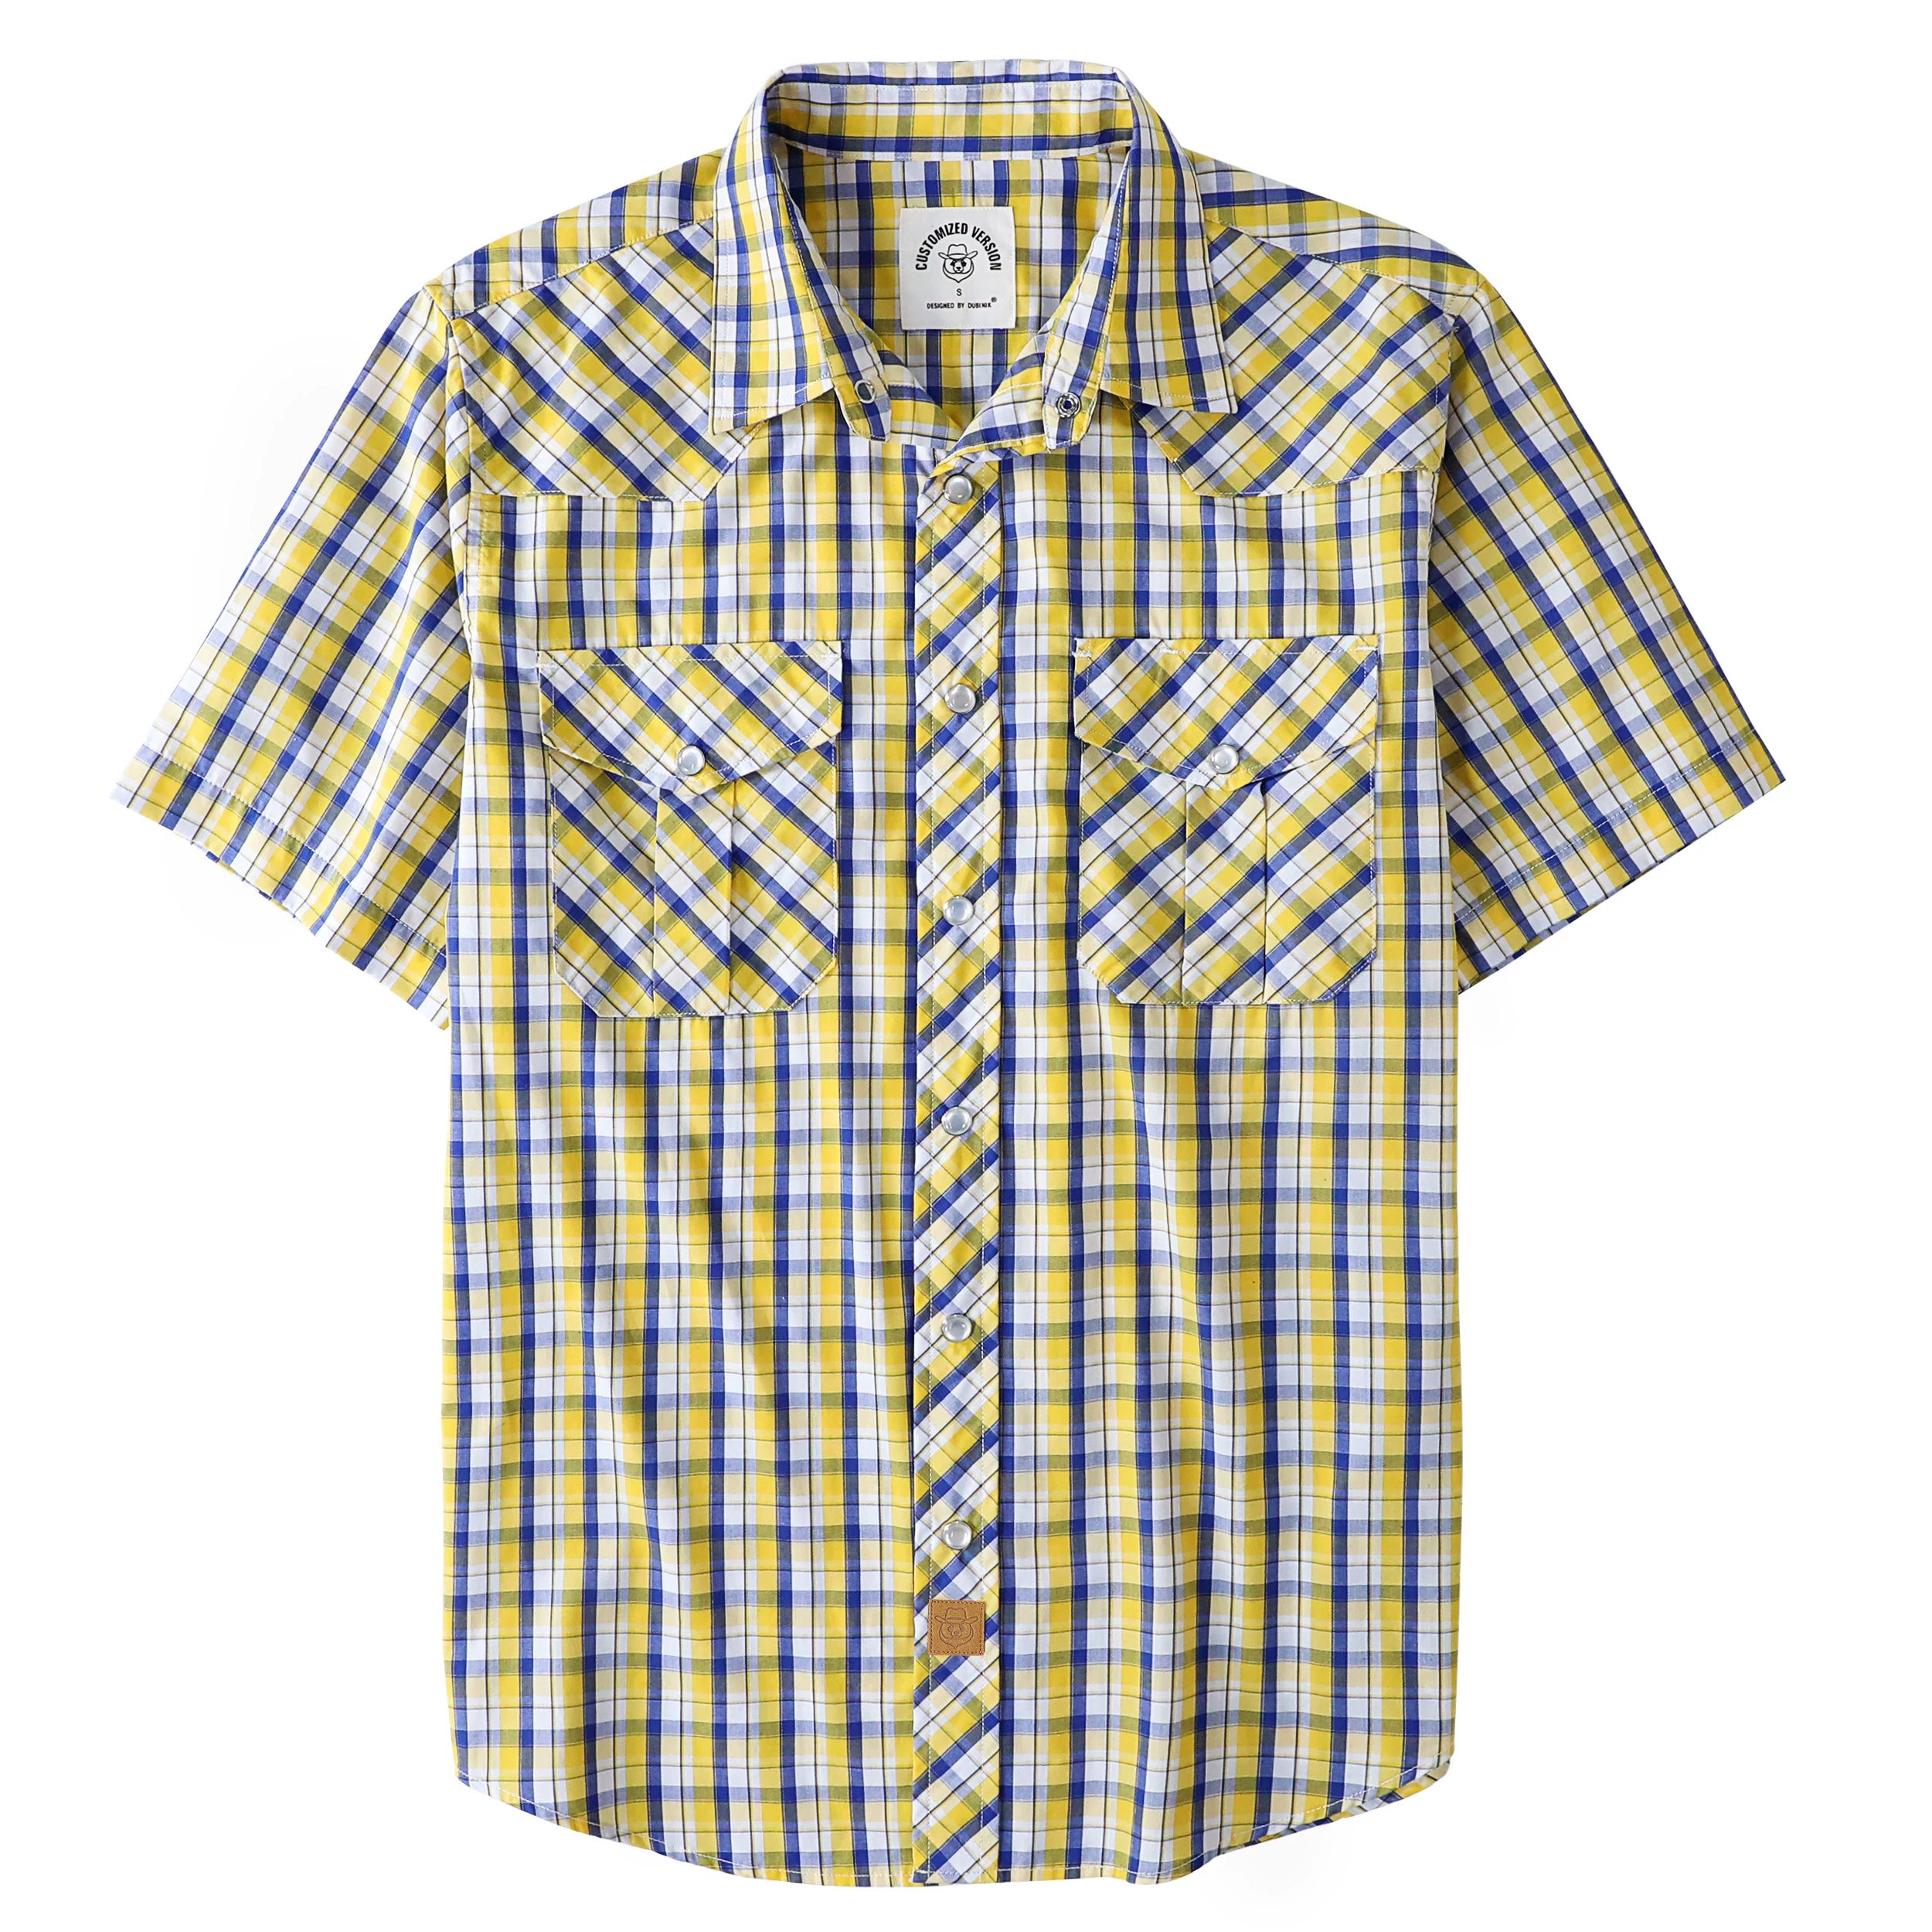 Dubinik® Western Shirts for Men Short Sleeve Plaid Pearl Snap Shirts for Men Button Up Shirt Cowboy Casual Work Shirt#41012